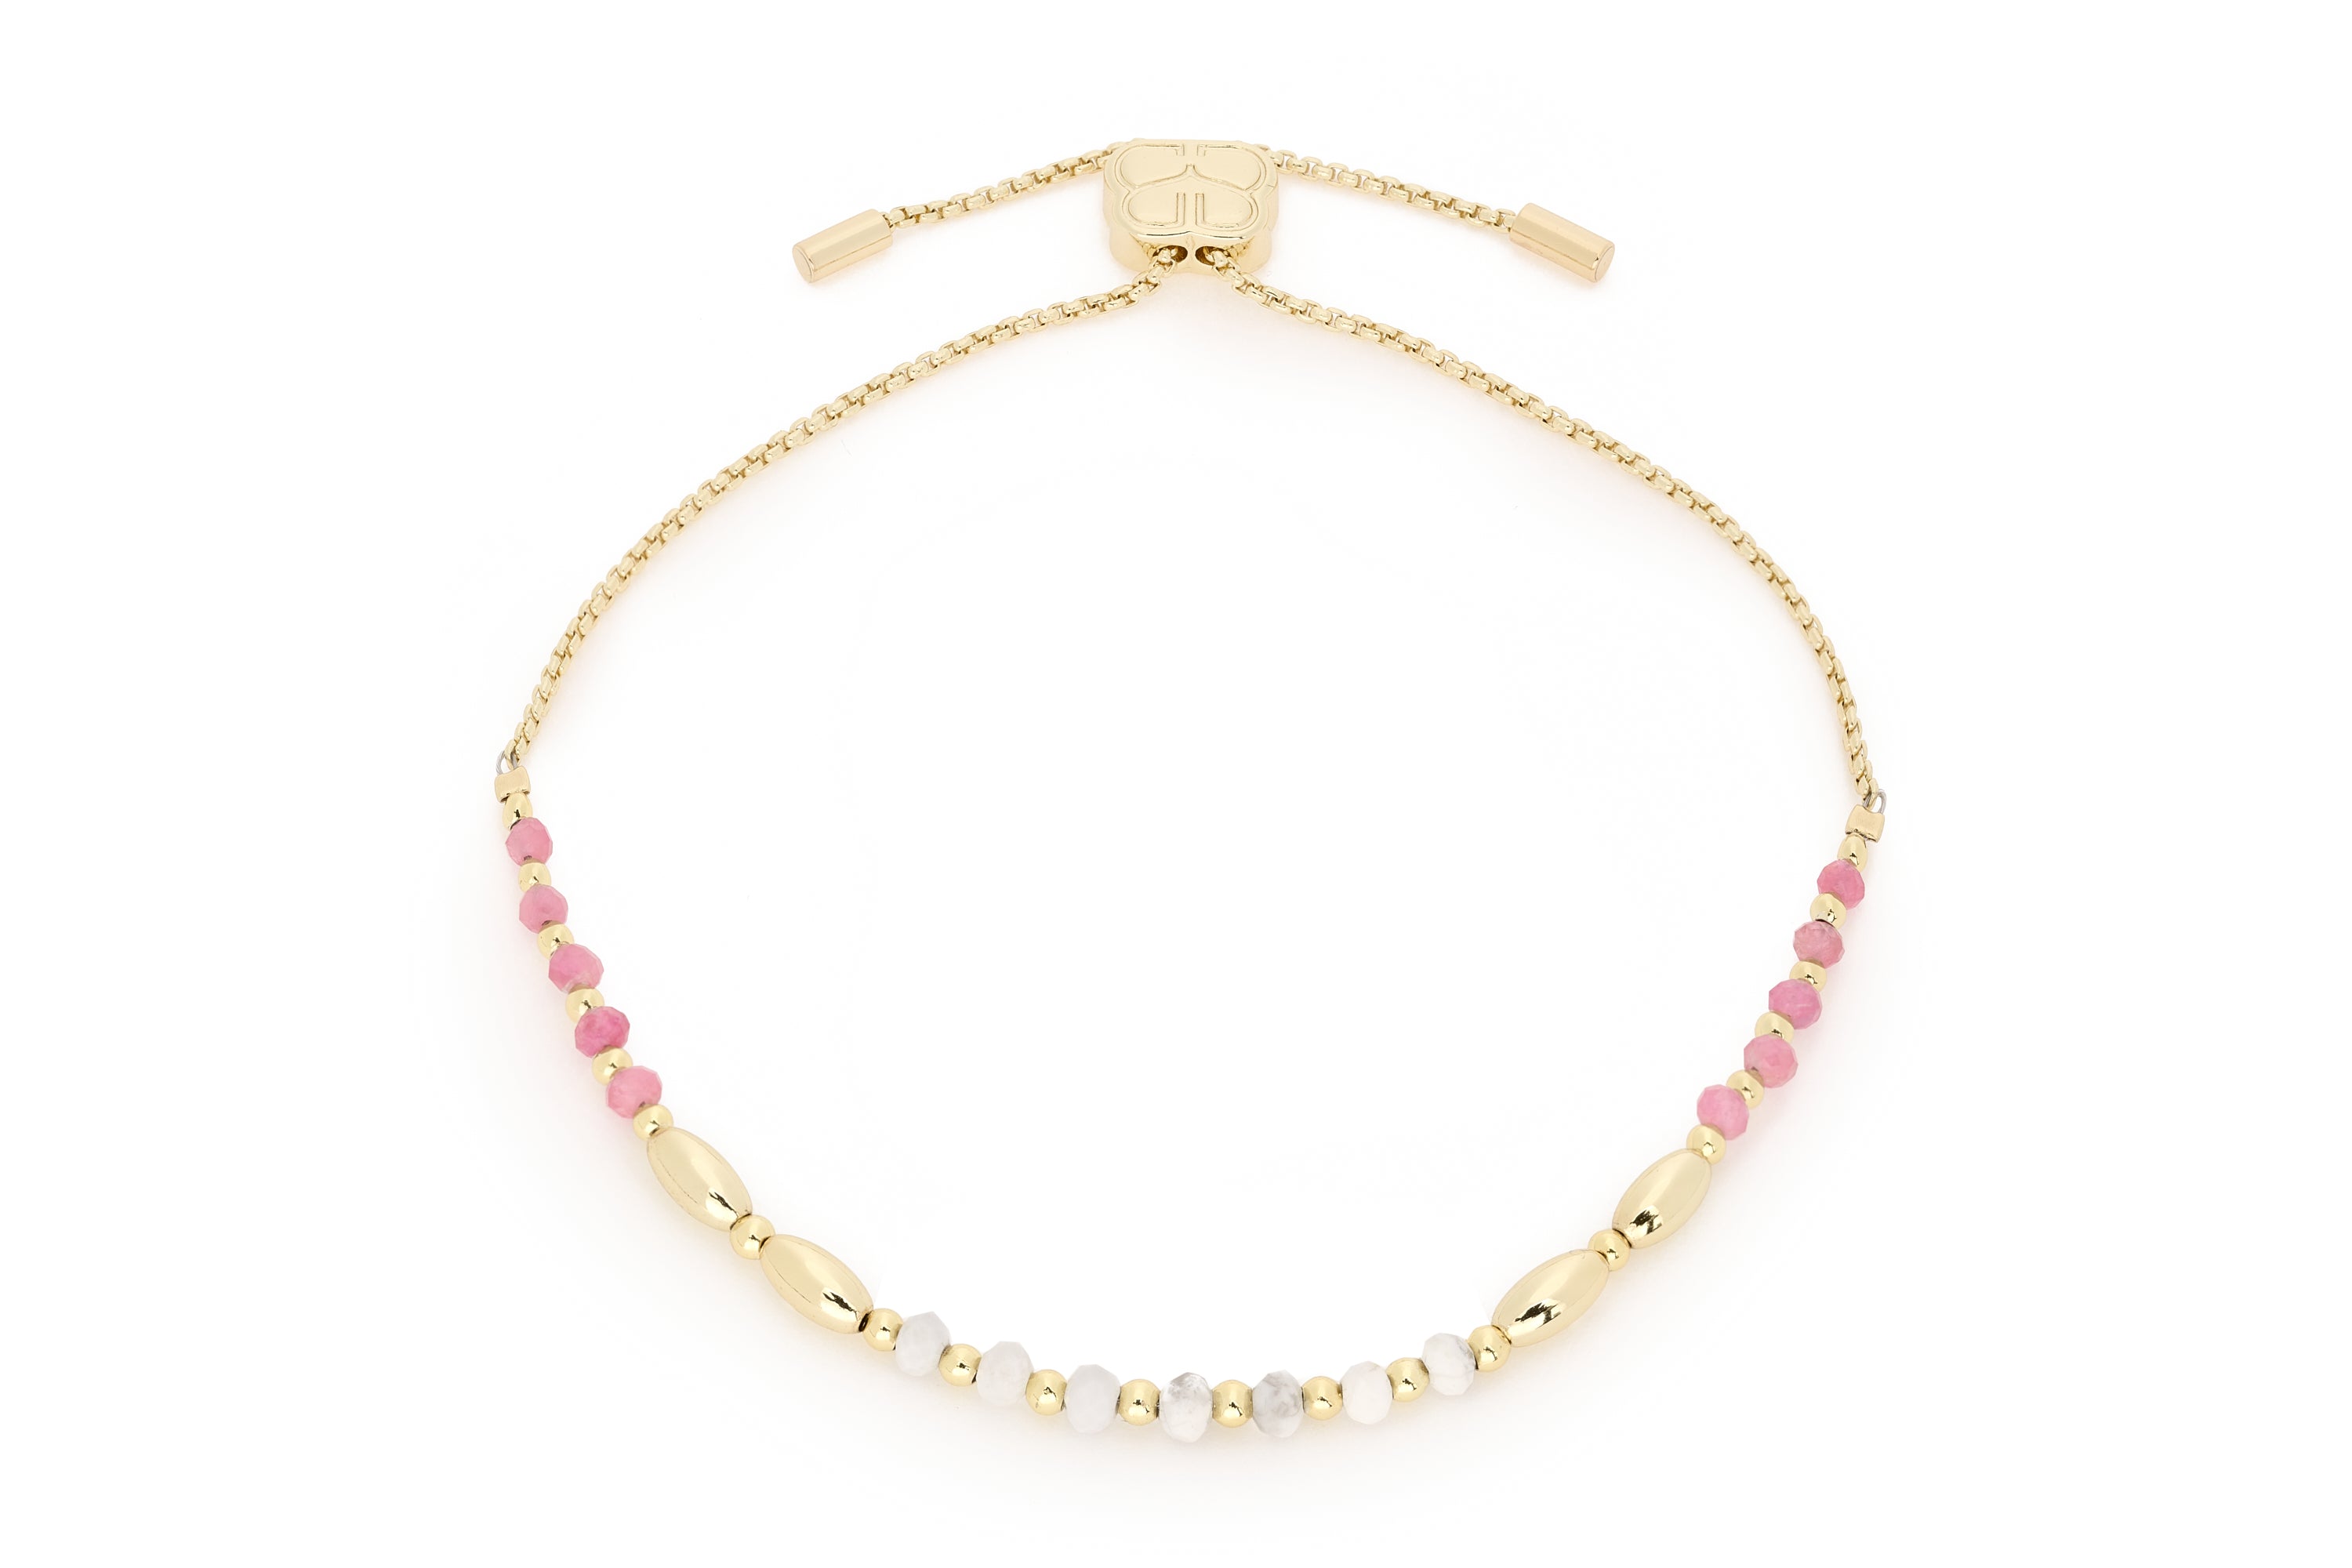 Radiance Pink Tourmaline Gemstone Bracelet